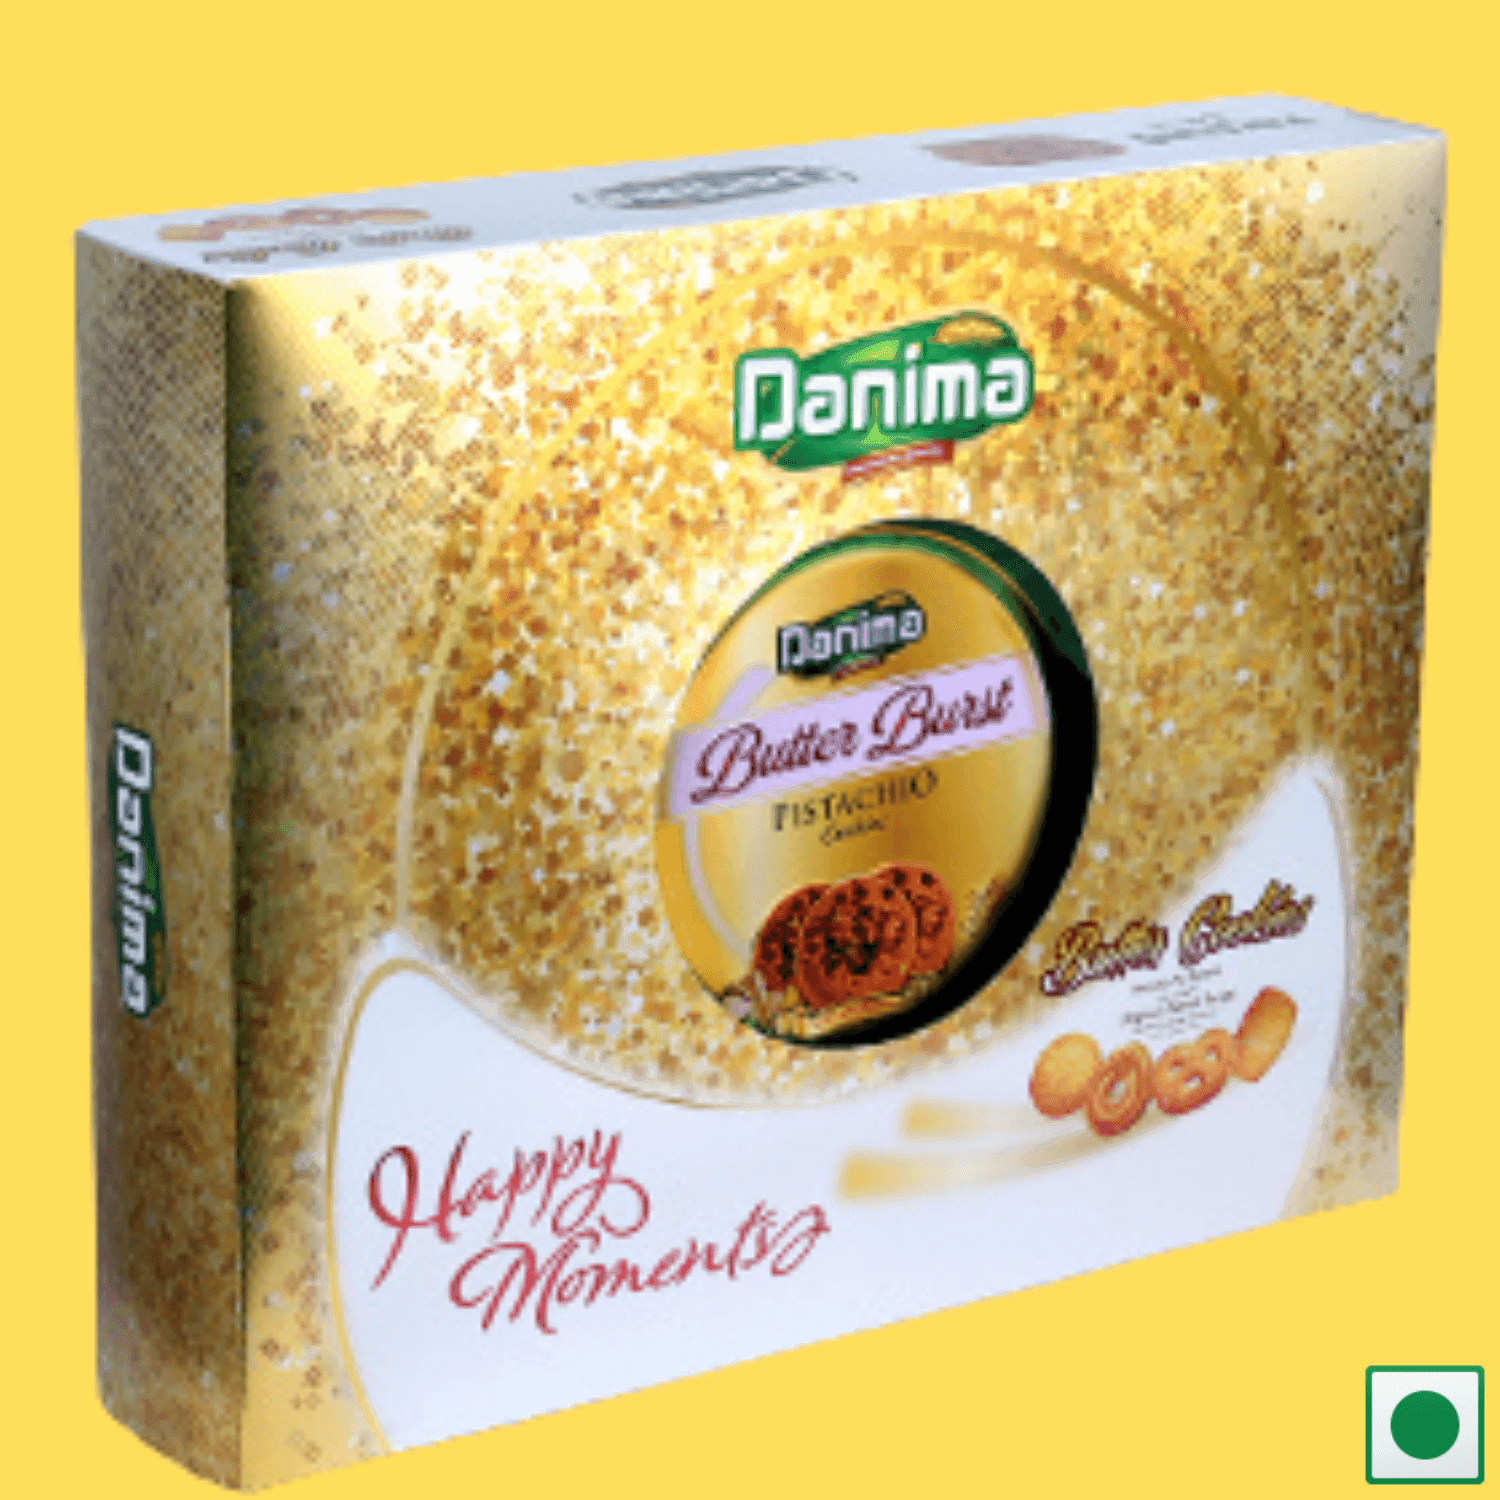 Danima Butter Burst Pistachio Cookies Tin+Butter Cookies Festive Combo Pack, 700g - Super 7 Mart